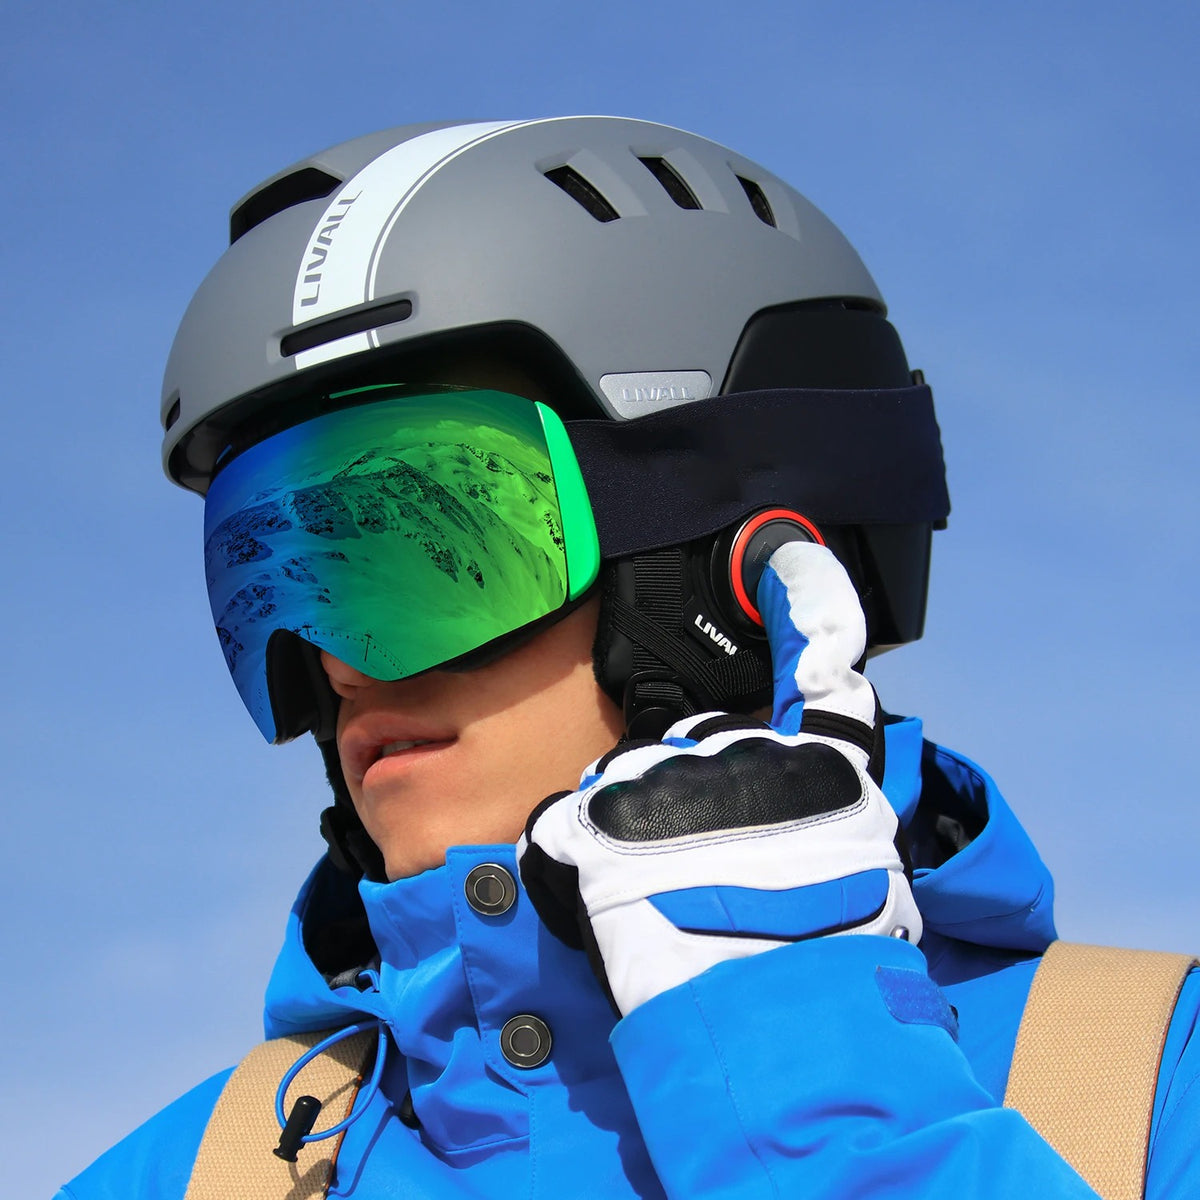 Smart Ski Equipment Protective Gear Winter Sports Helmet